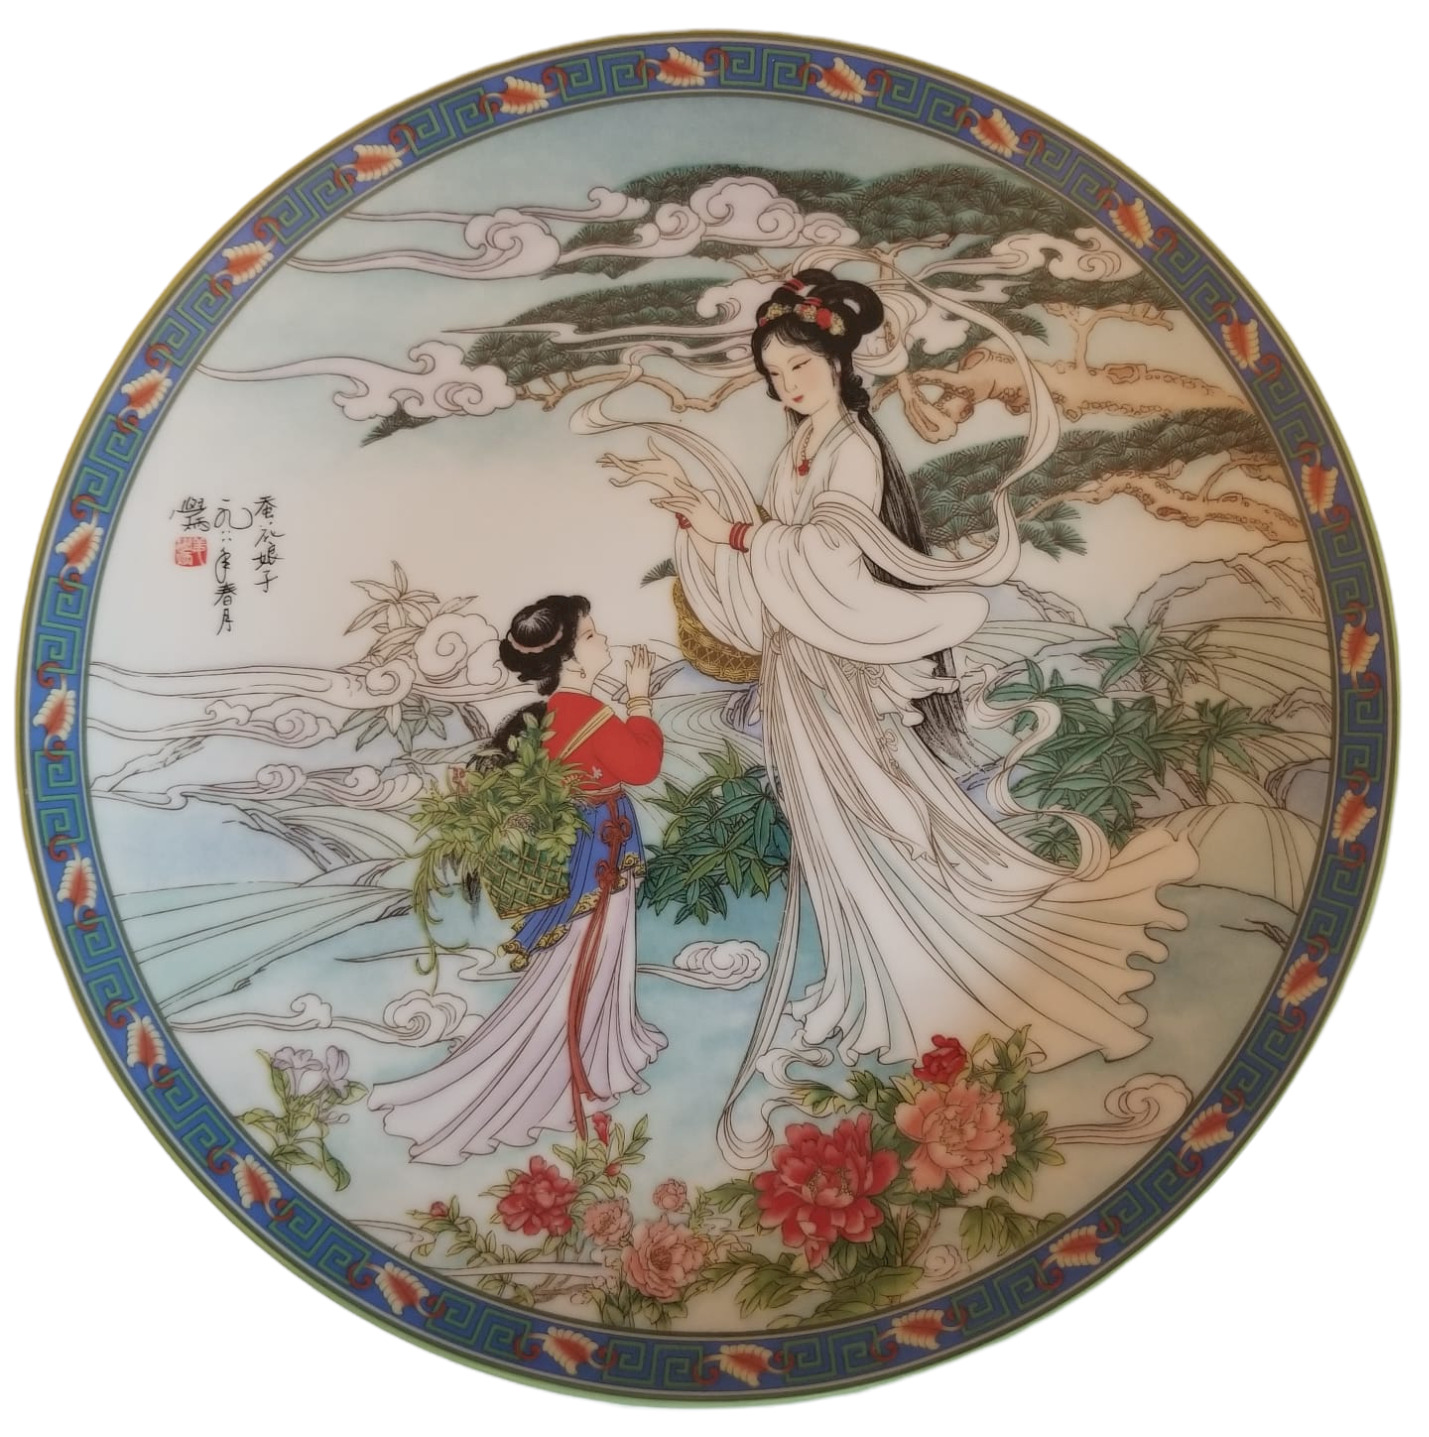 VTG Chinese Decorative Imperial Jingdezhen Porcelain Plate Child Kwan Yin 1990